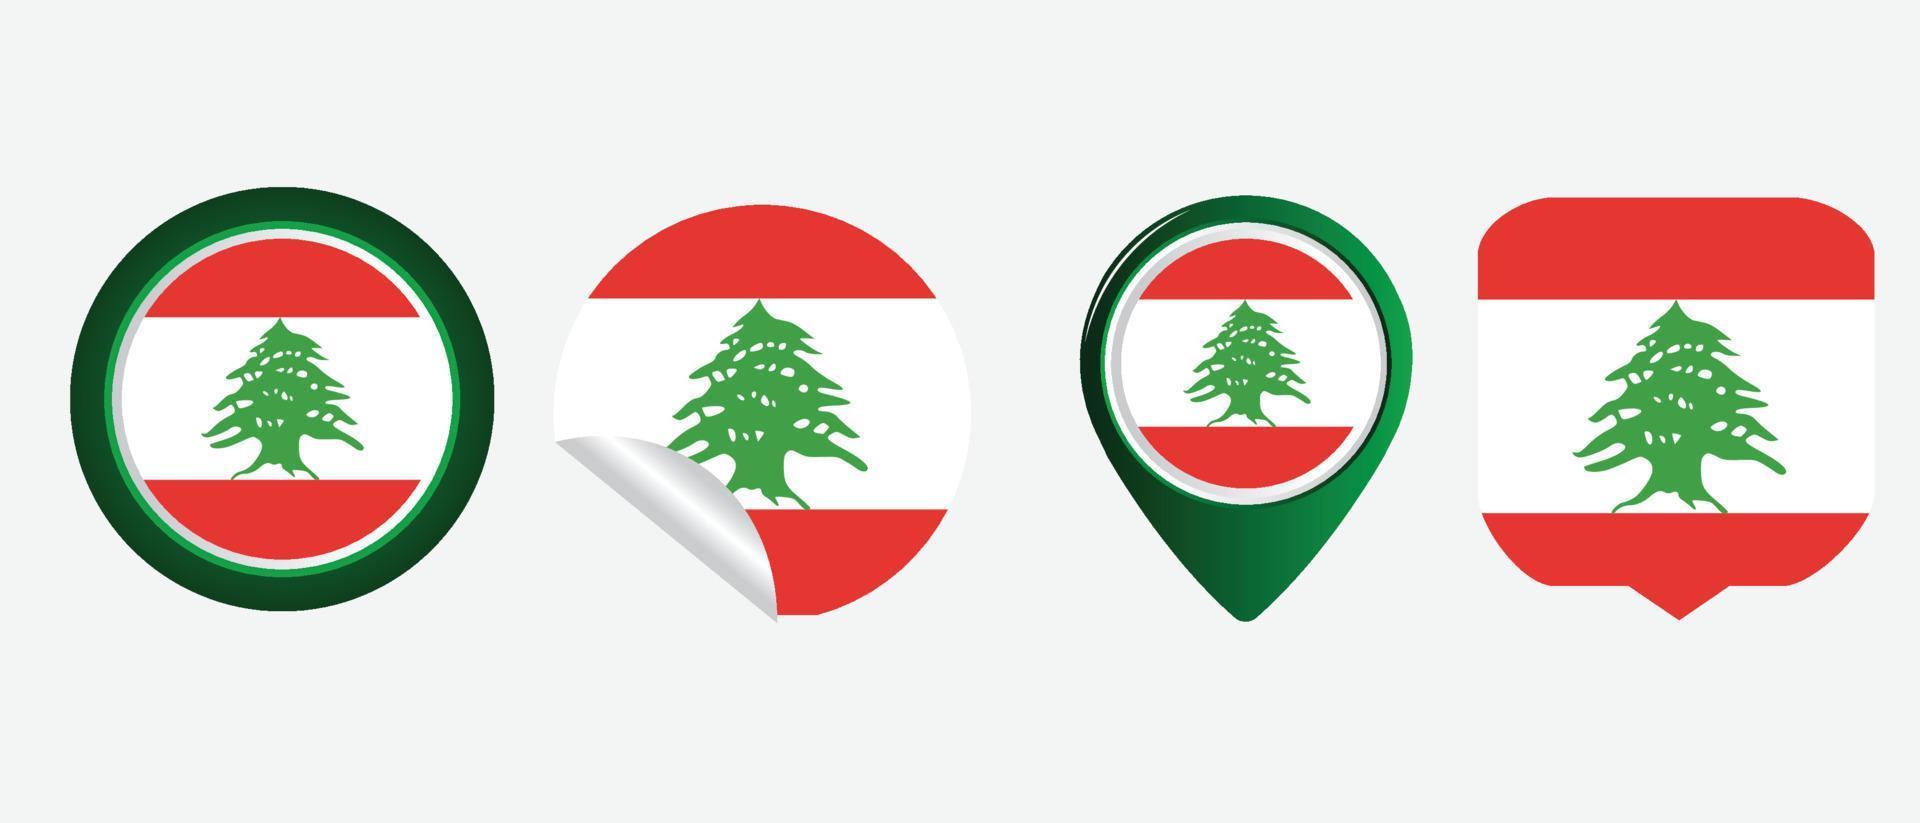 Lebanon flag icon . web icon set . icons collection flat. Simple vector illustration.